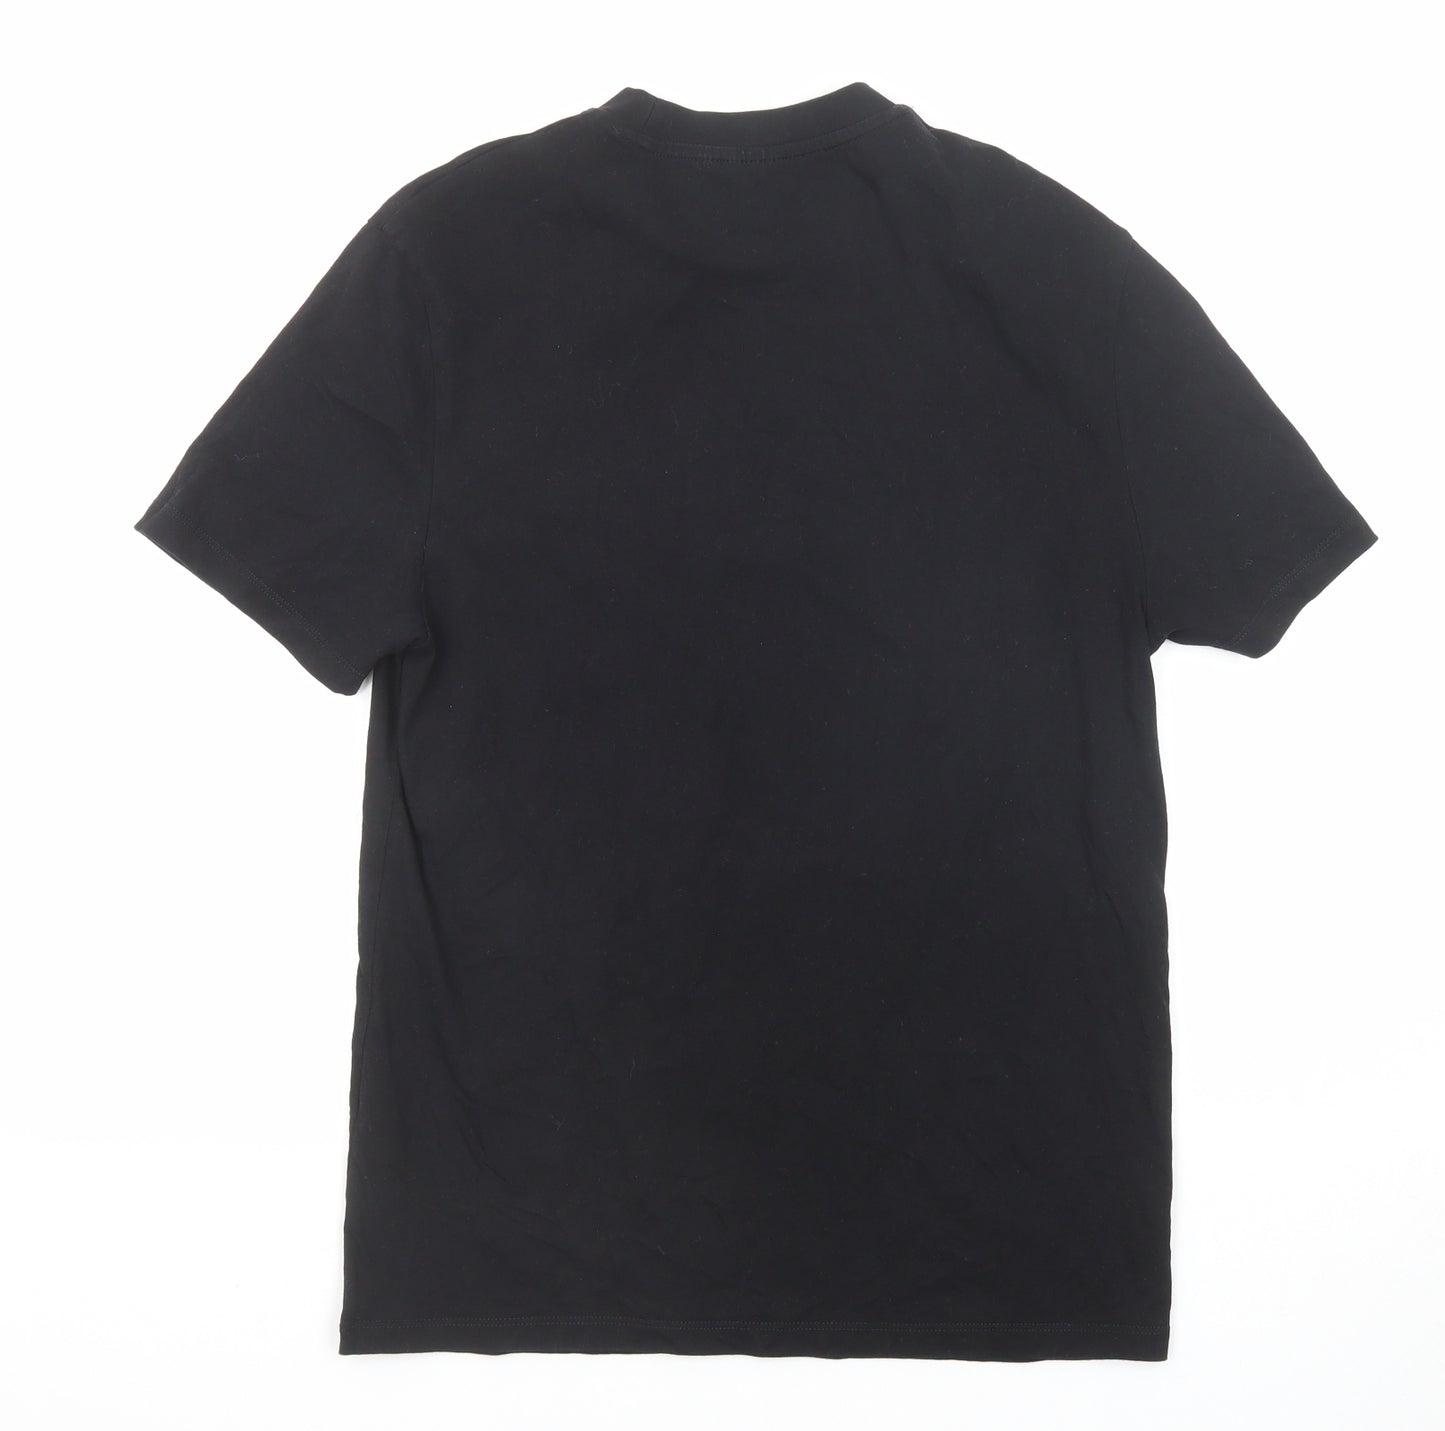 ASOS Mens Black Cotton T-Shirt Size M Round Neck